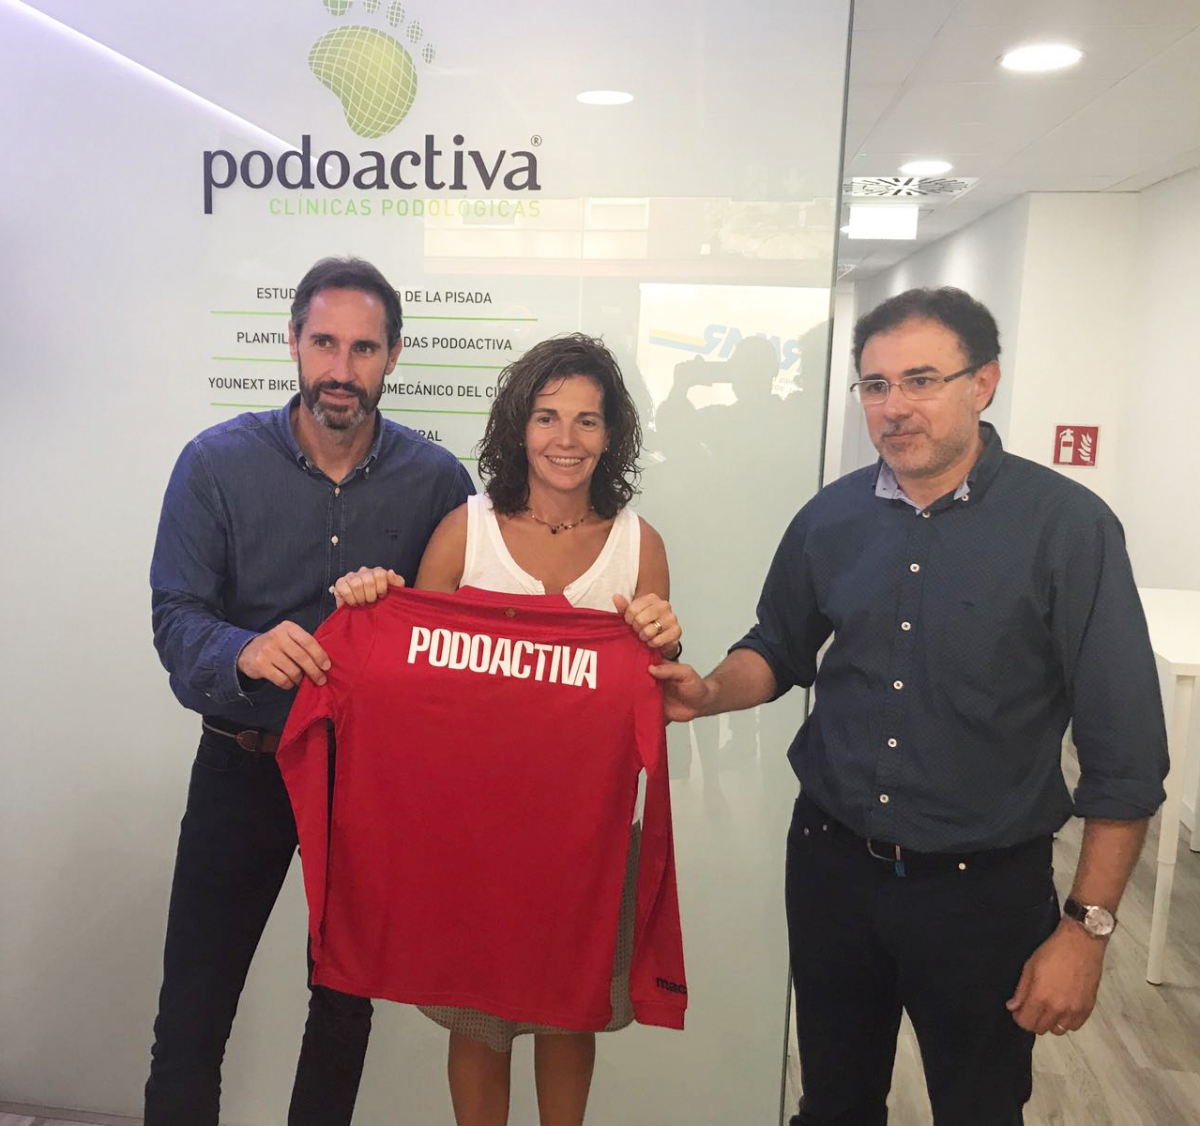 Podoactiva Palma will care of the feet of the RCD Mallorca - Podoactiva players. Leaders in Podiatry